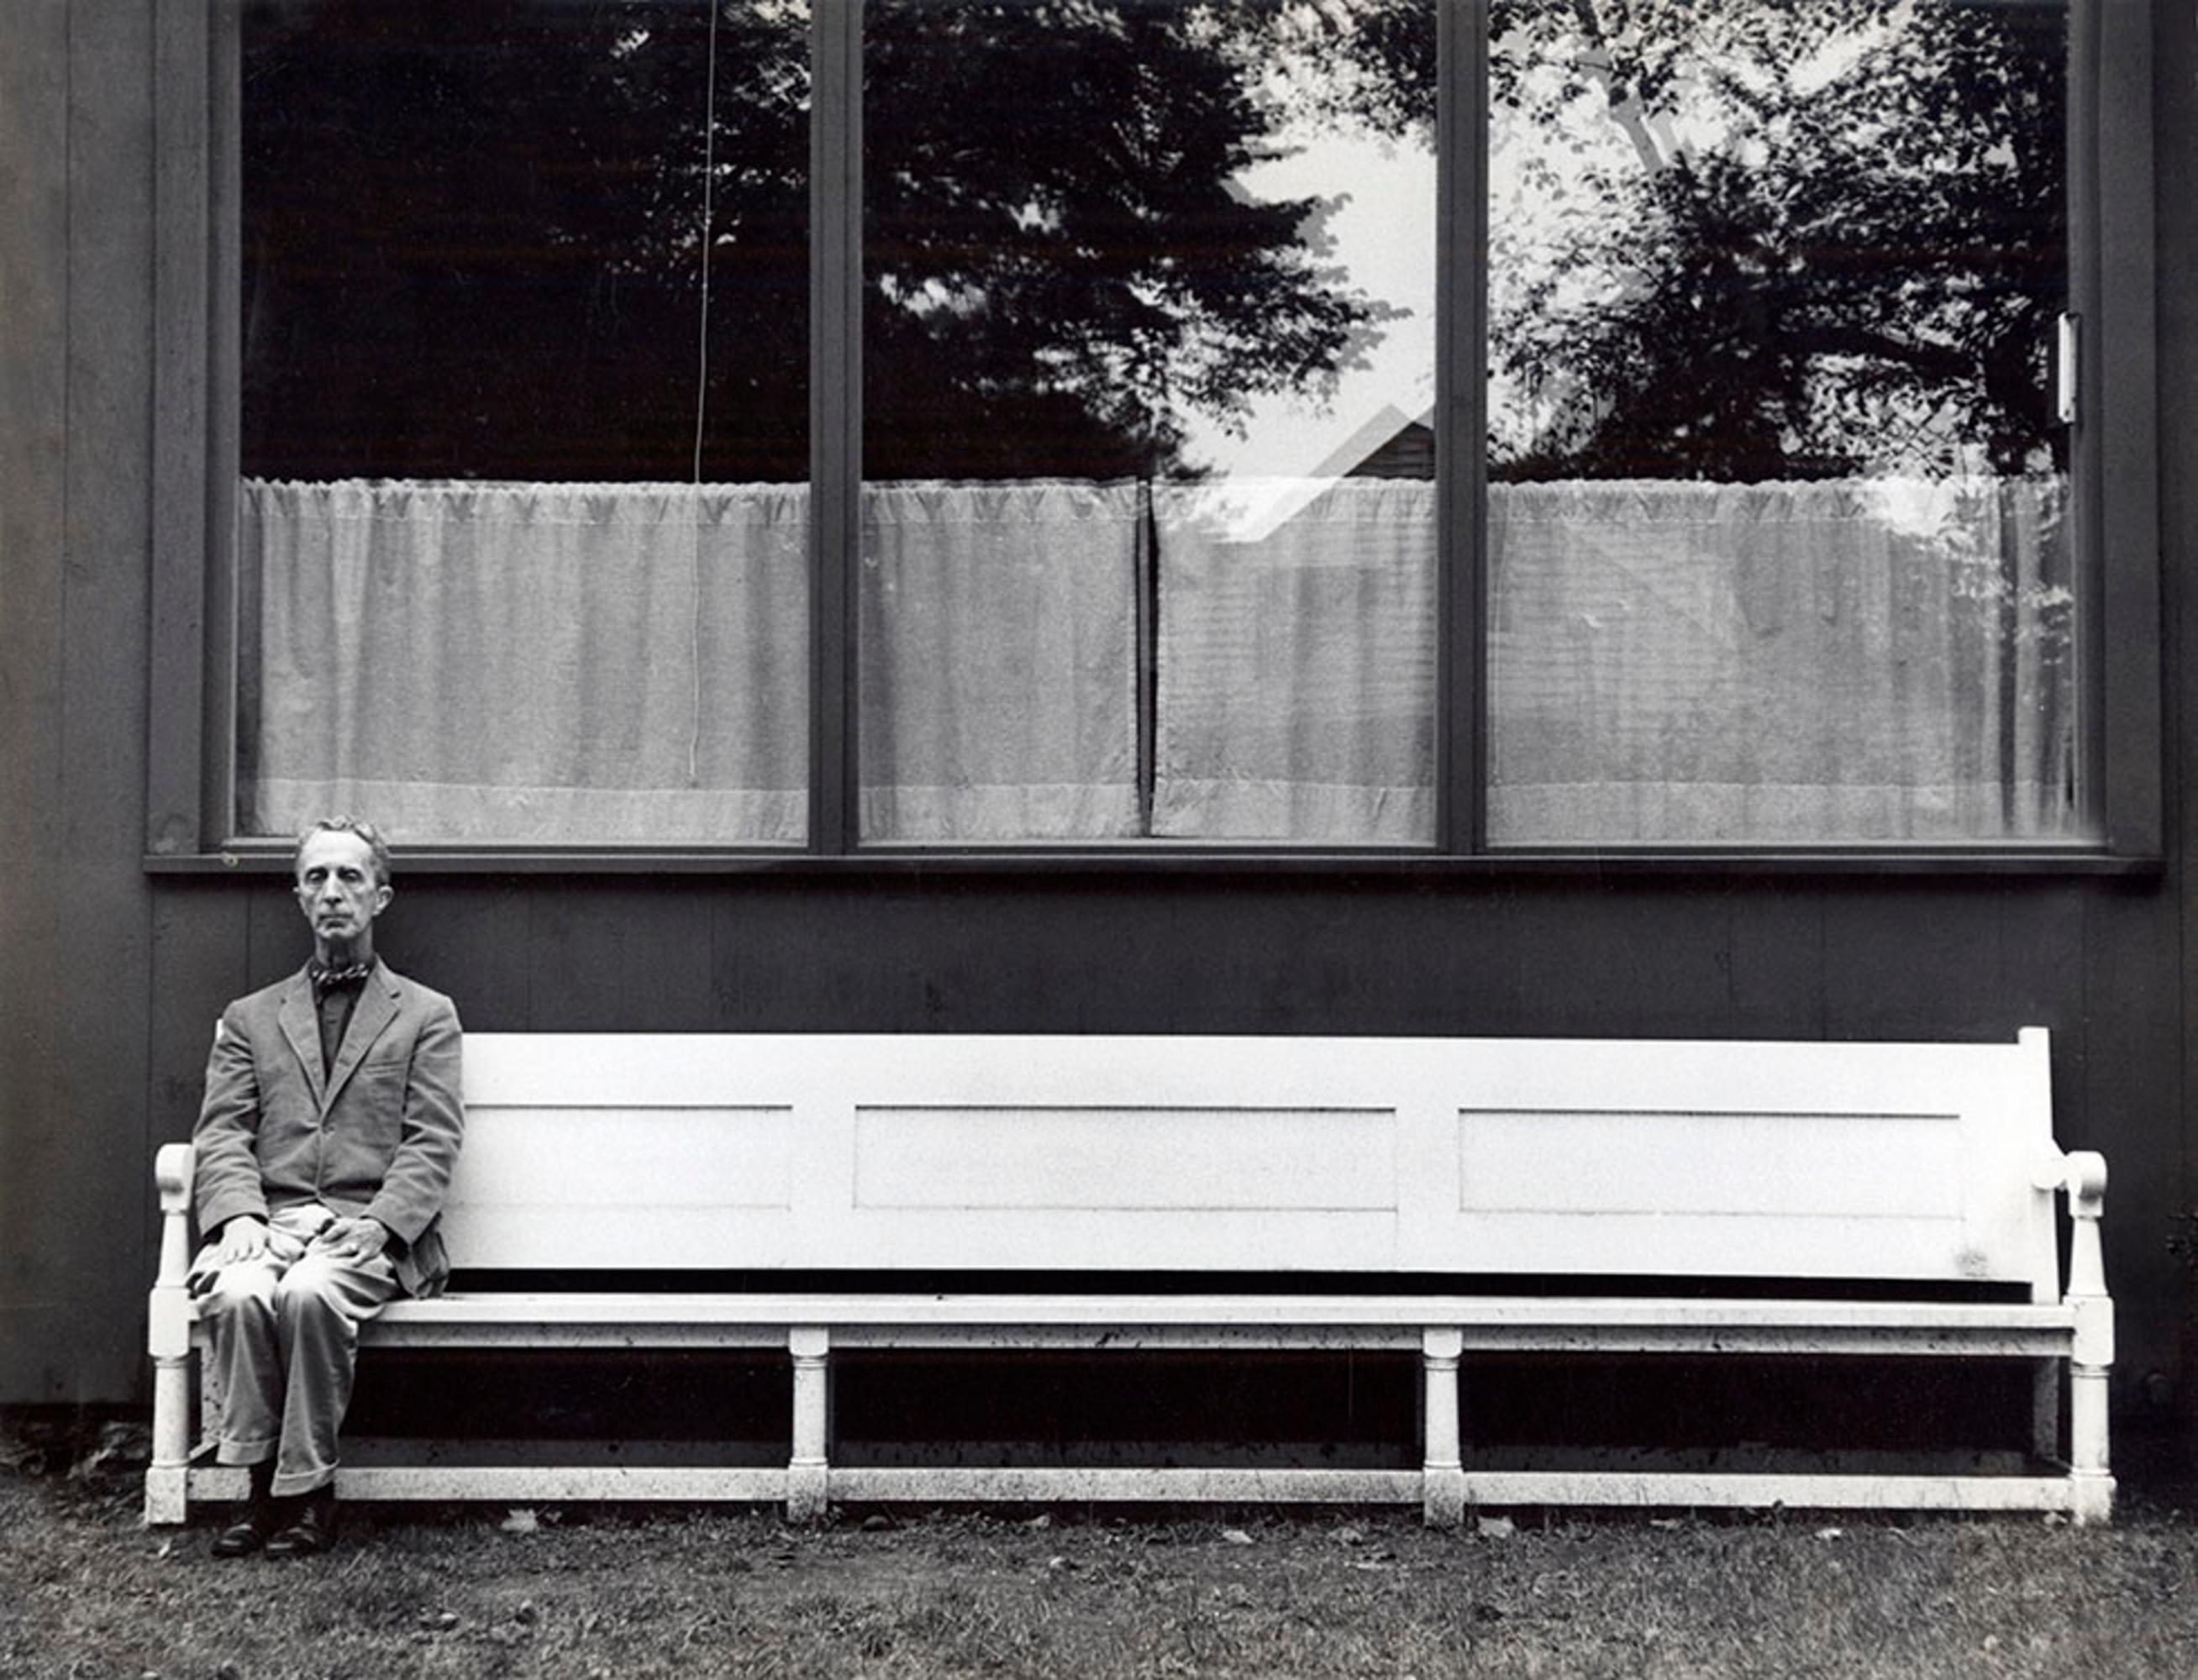 Lawrence Fried – Norman Rockwell, Fotografie 1959, Druck nach